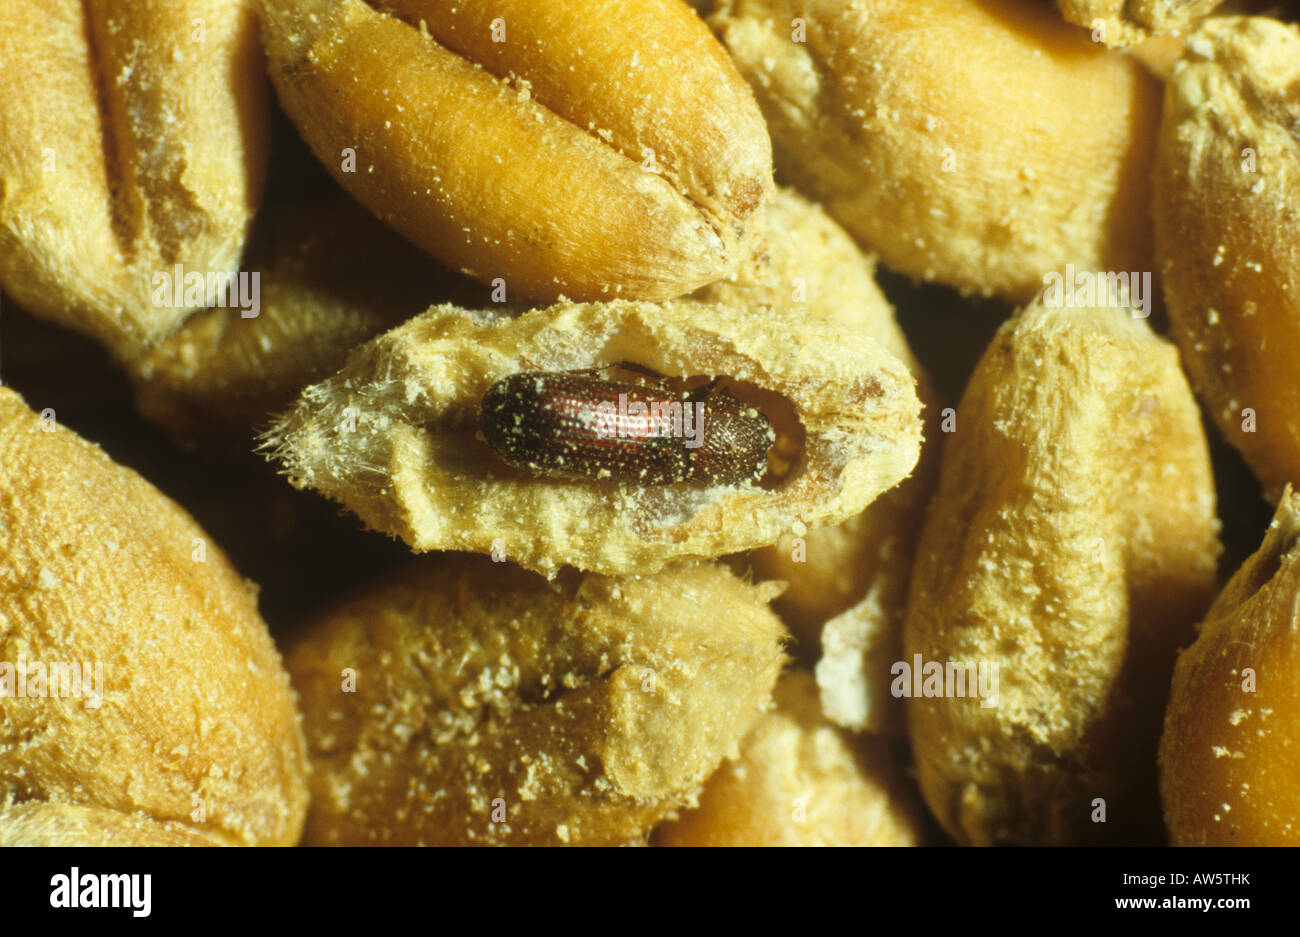 Lesser grain borer Rhizopertha dominica on wheat grain Stock Photo